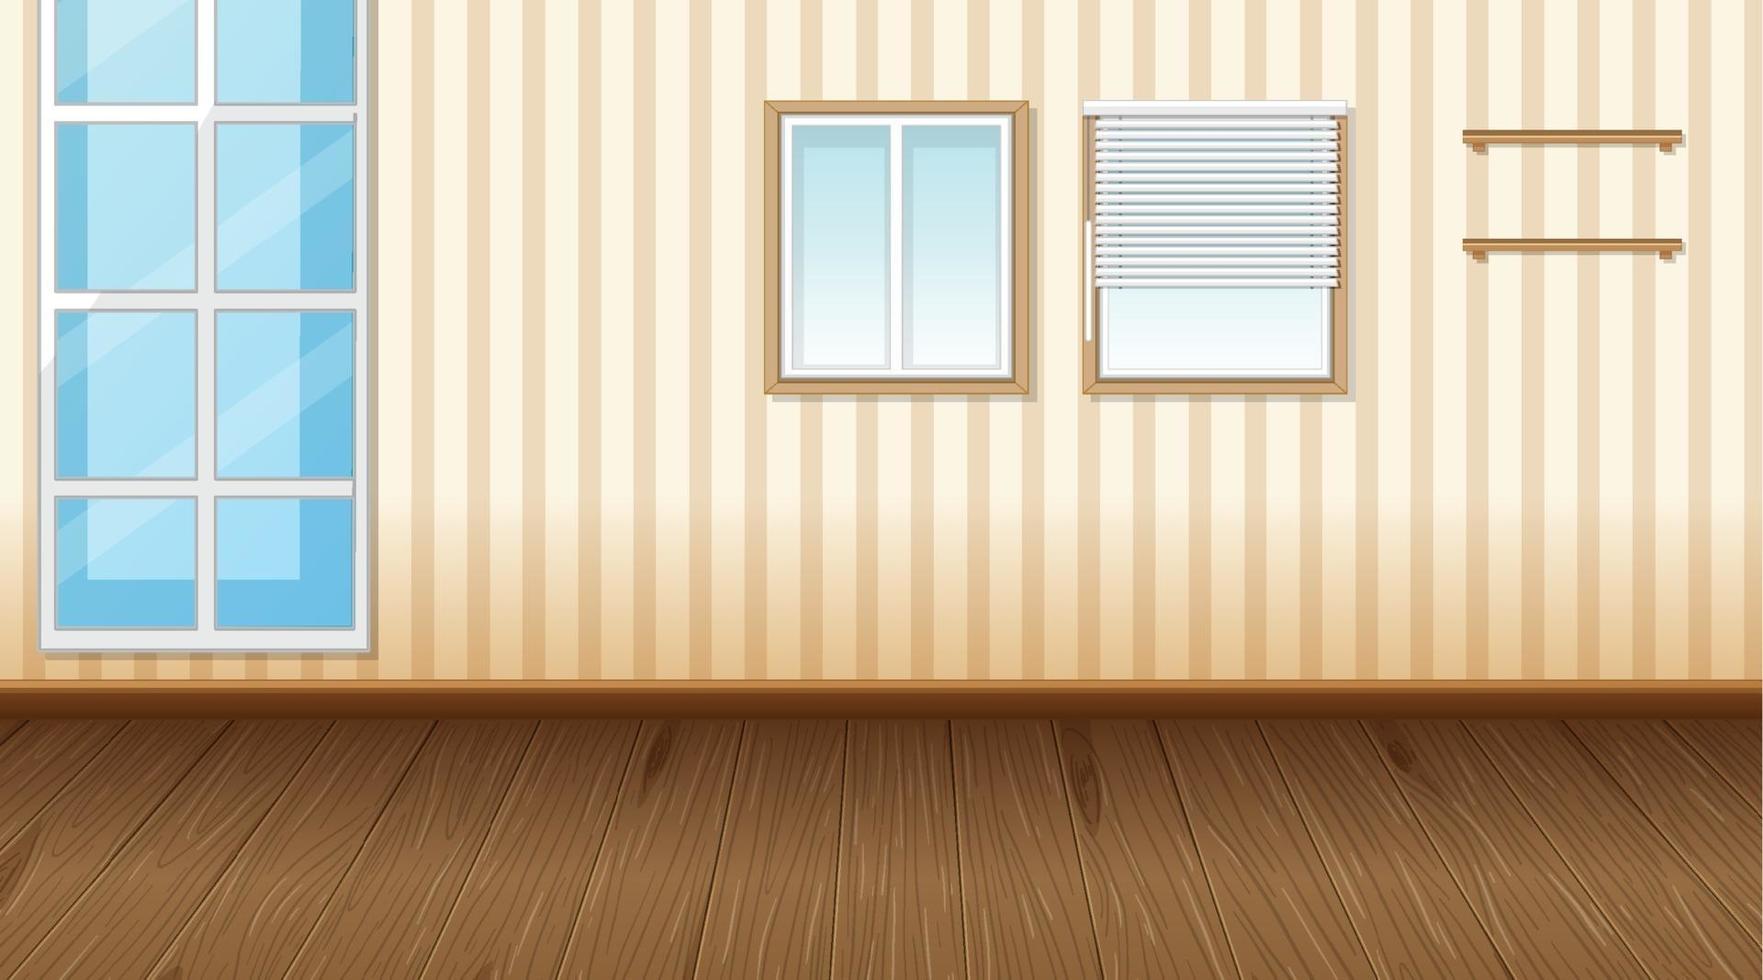 Empty room with parquet floor and beige striped wallpaper vector